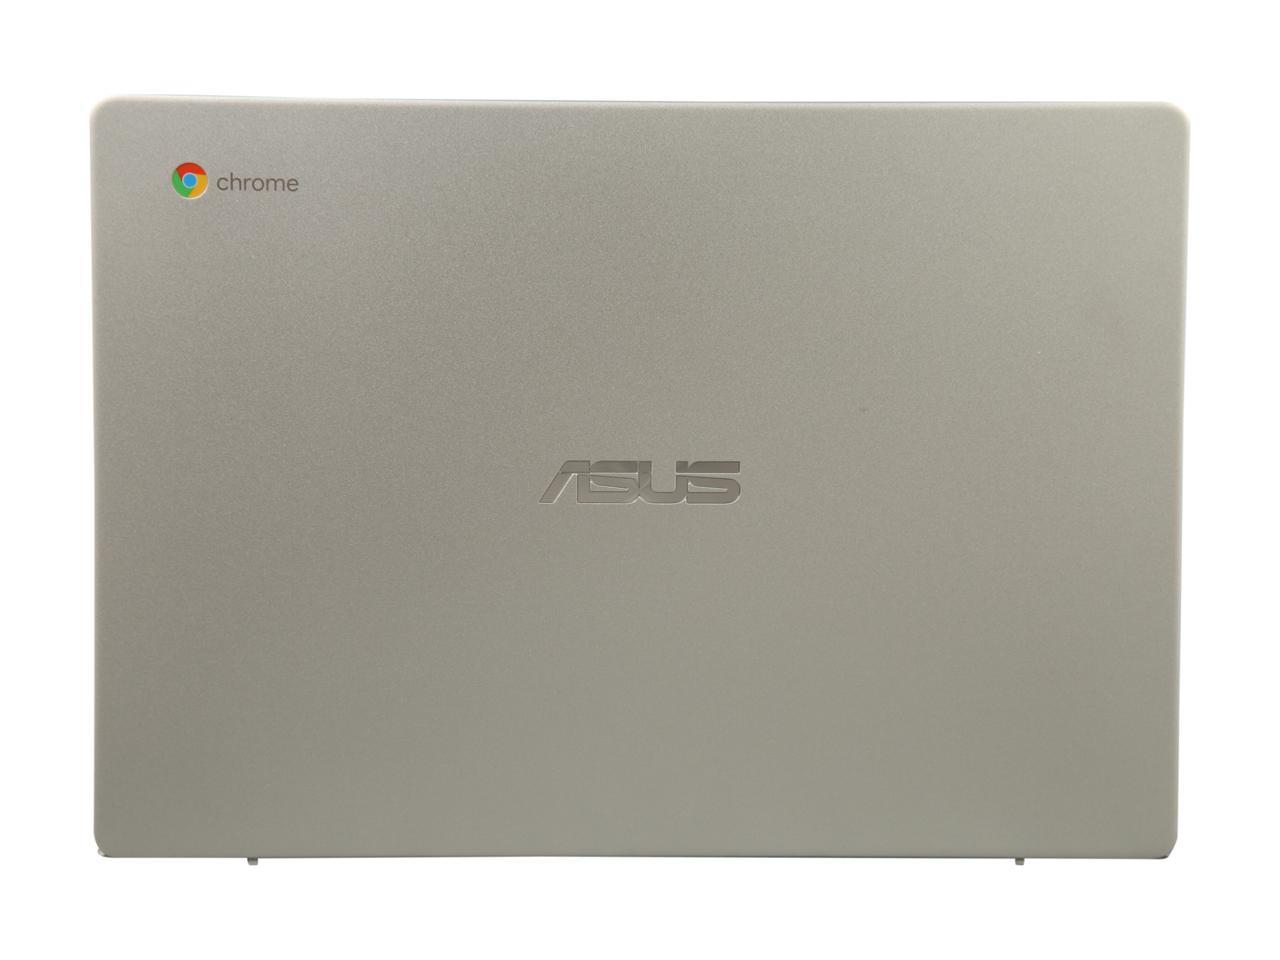 ASUS Chromebook C423NA-DH02 14.0" HD NanoEdge Display with 180 Degree Hinge Intel Dual Core Celeron Processor, 4 GB RAM, 32 GB eMMC Storage, Silver Color